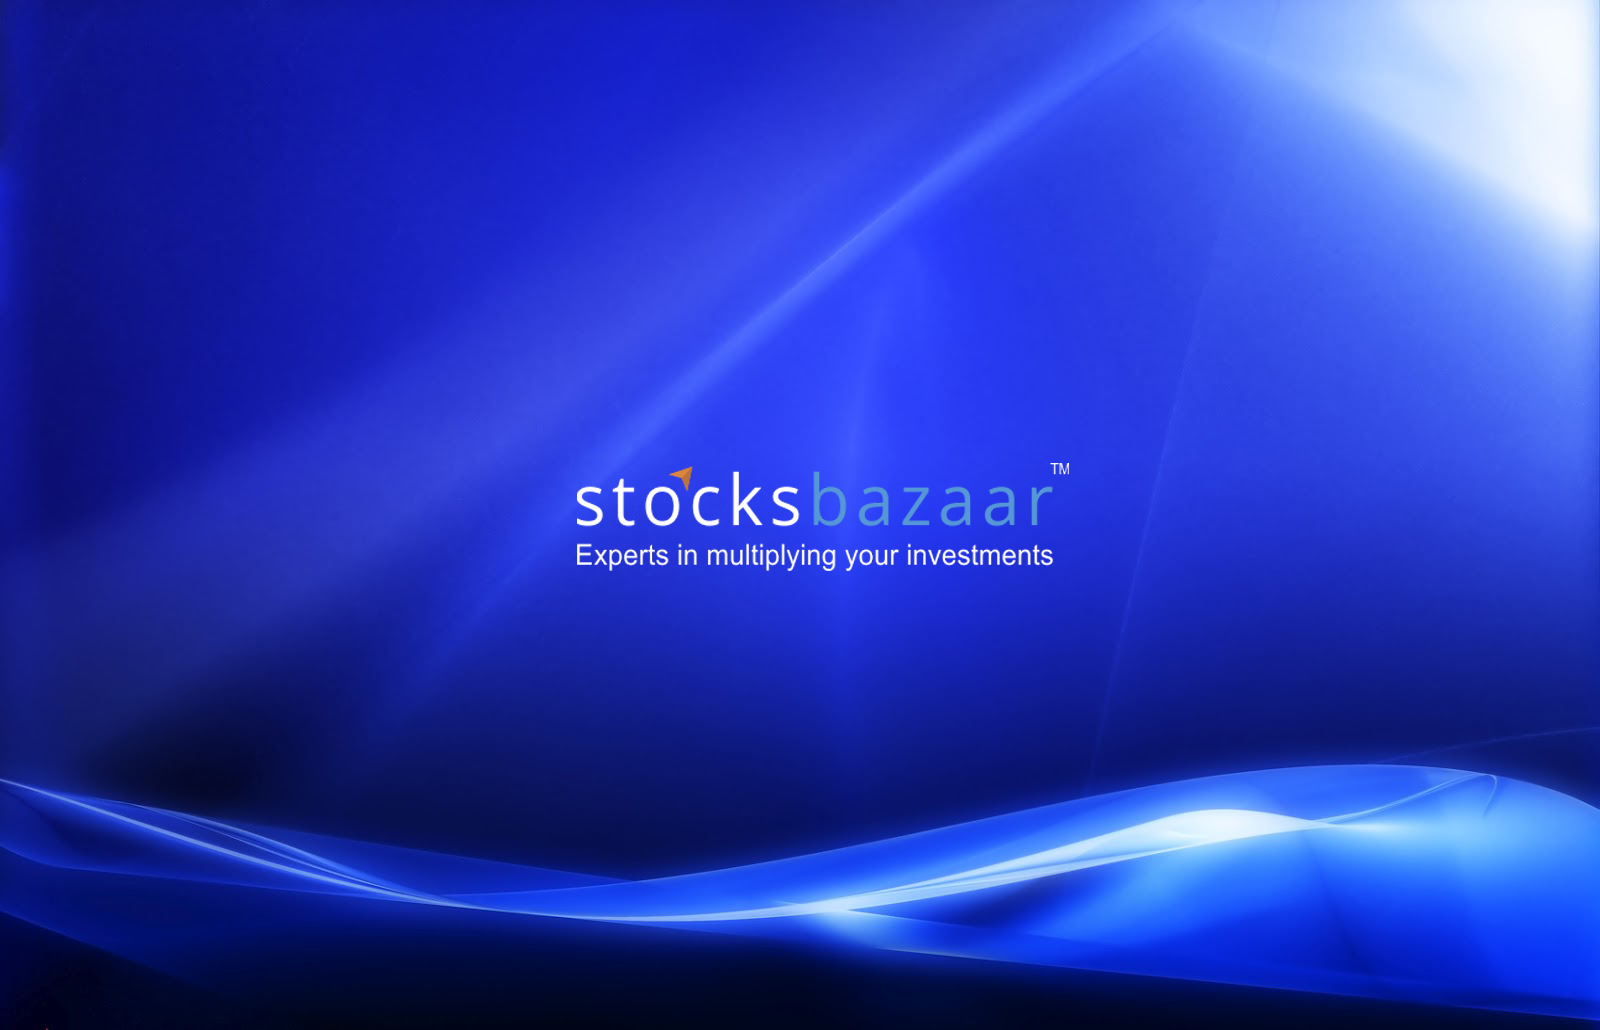 StocksBazaar